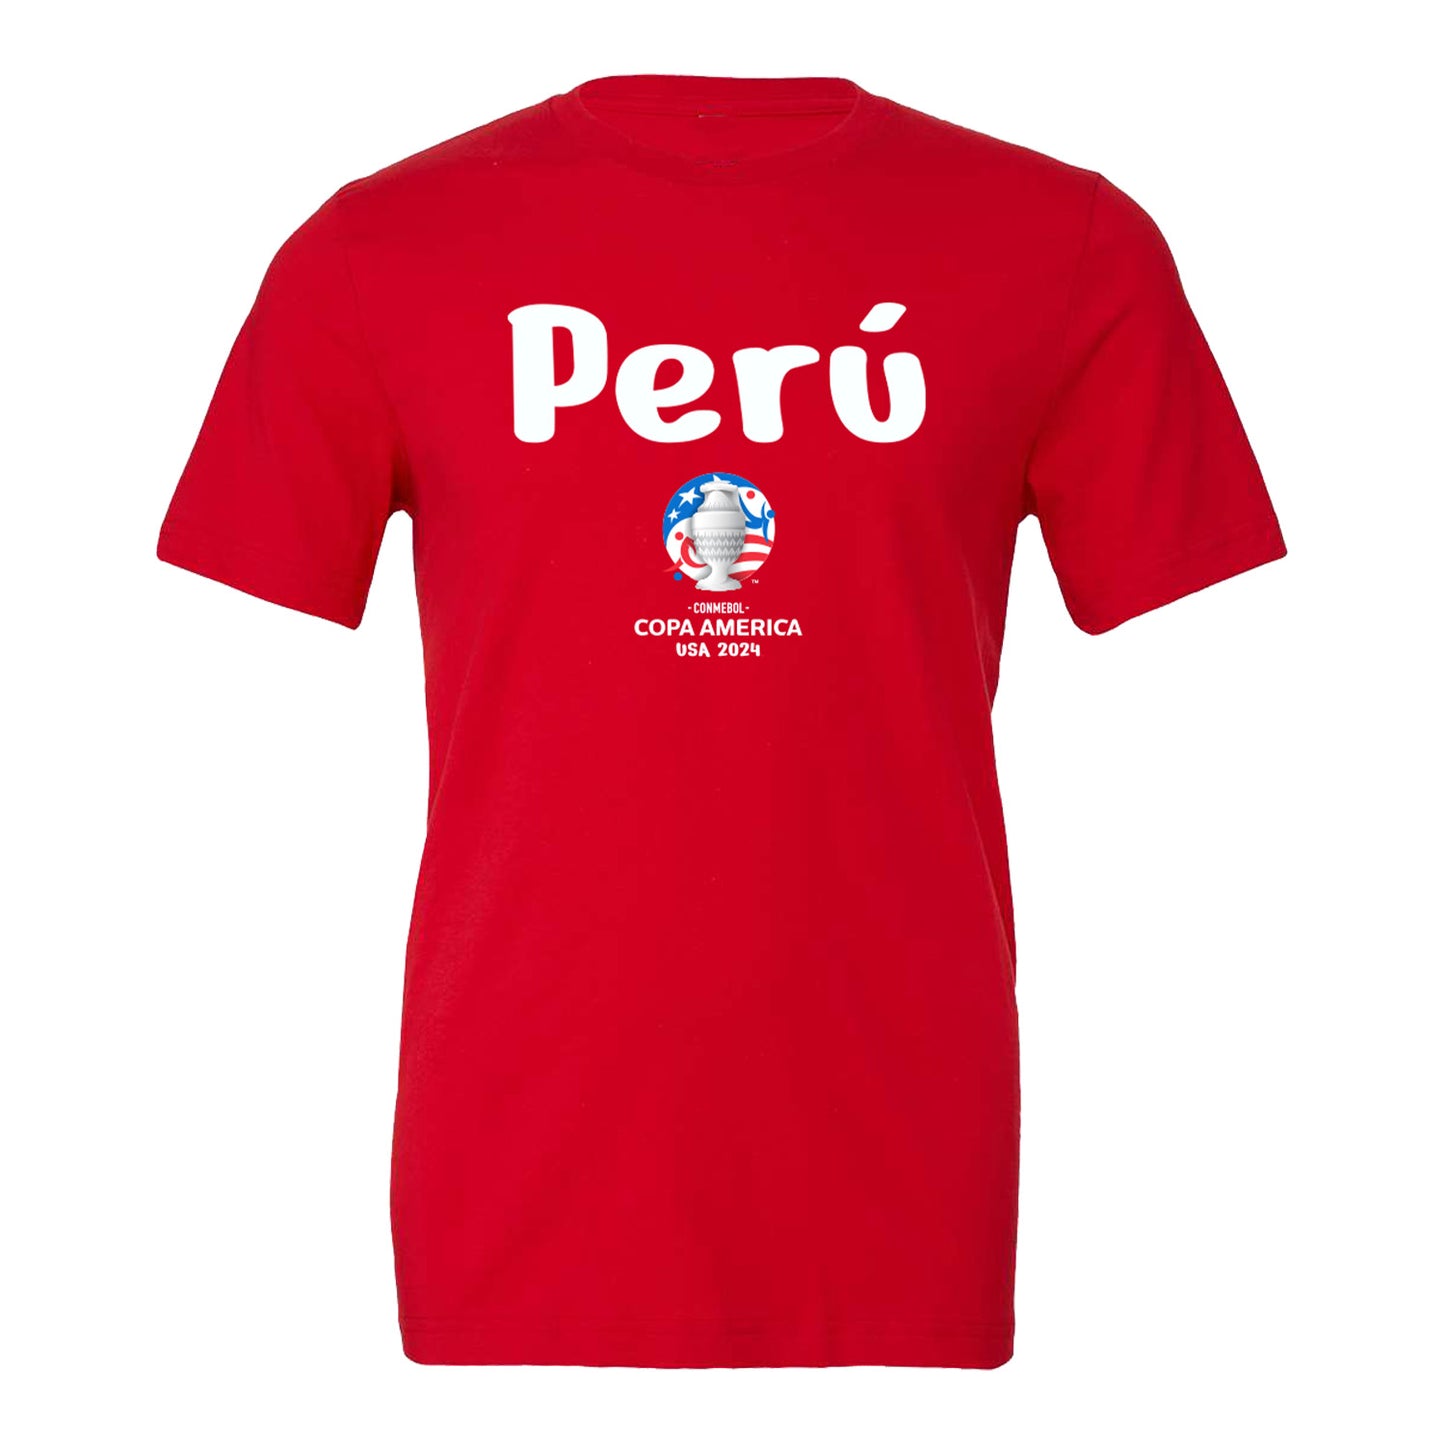 Copa America Peru Red T-Shirt - Front View